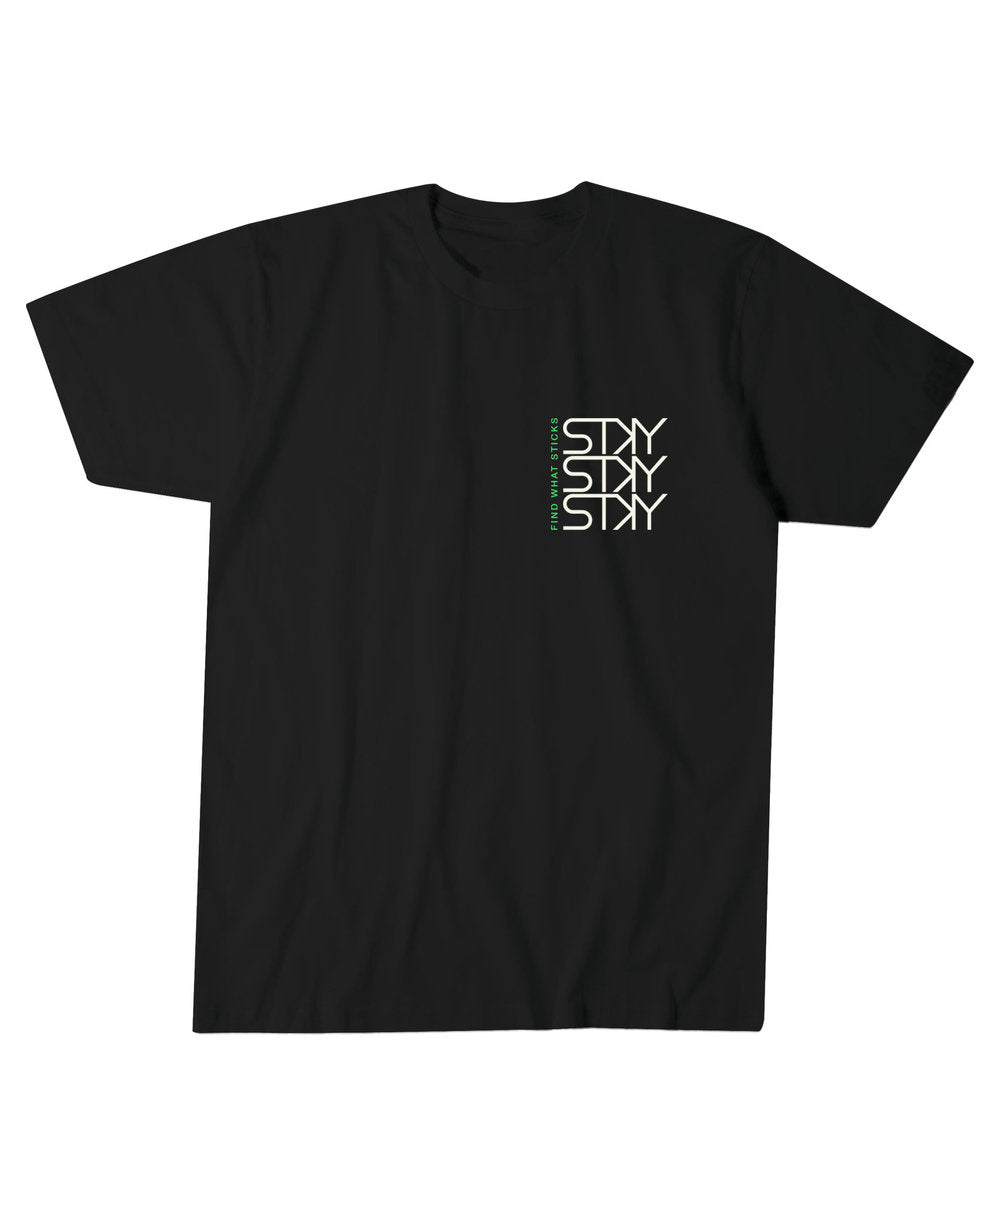 x3 STKY shirt